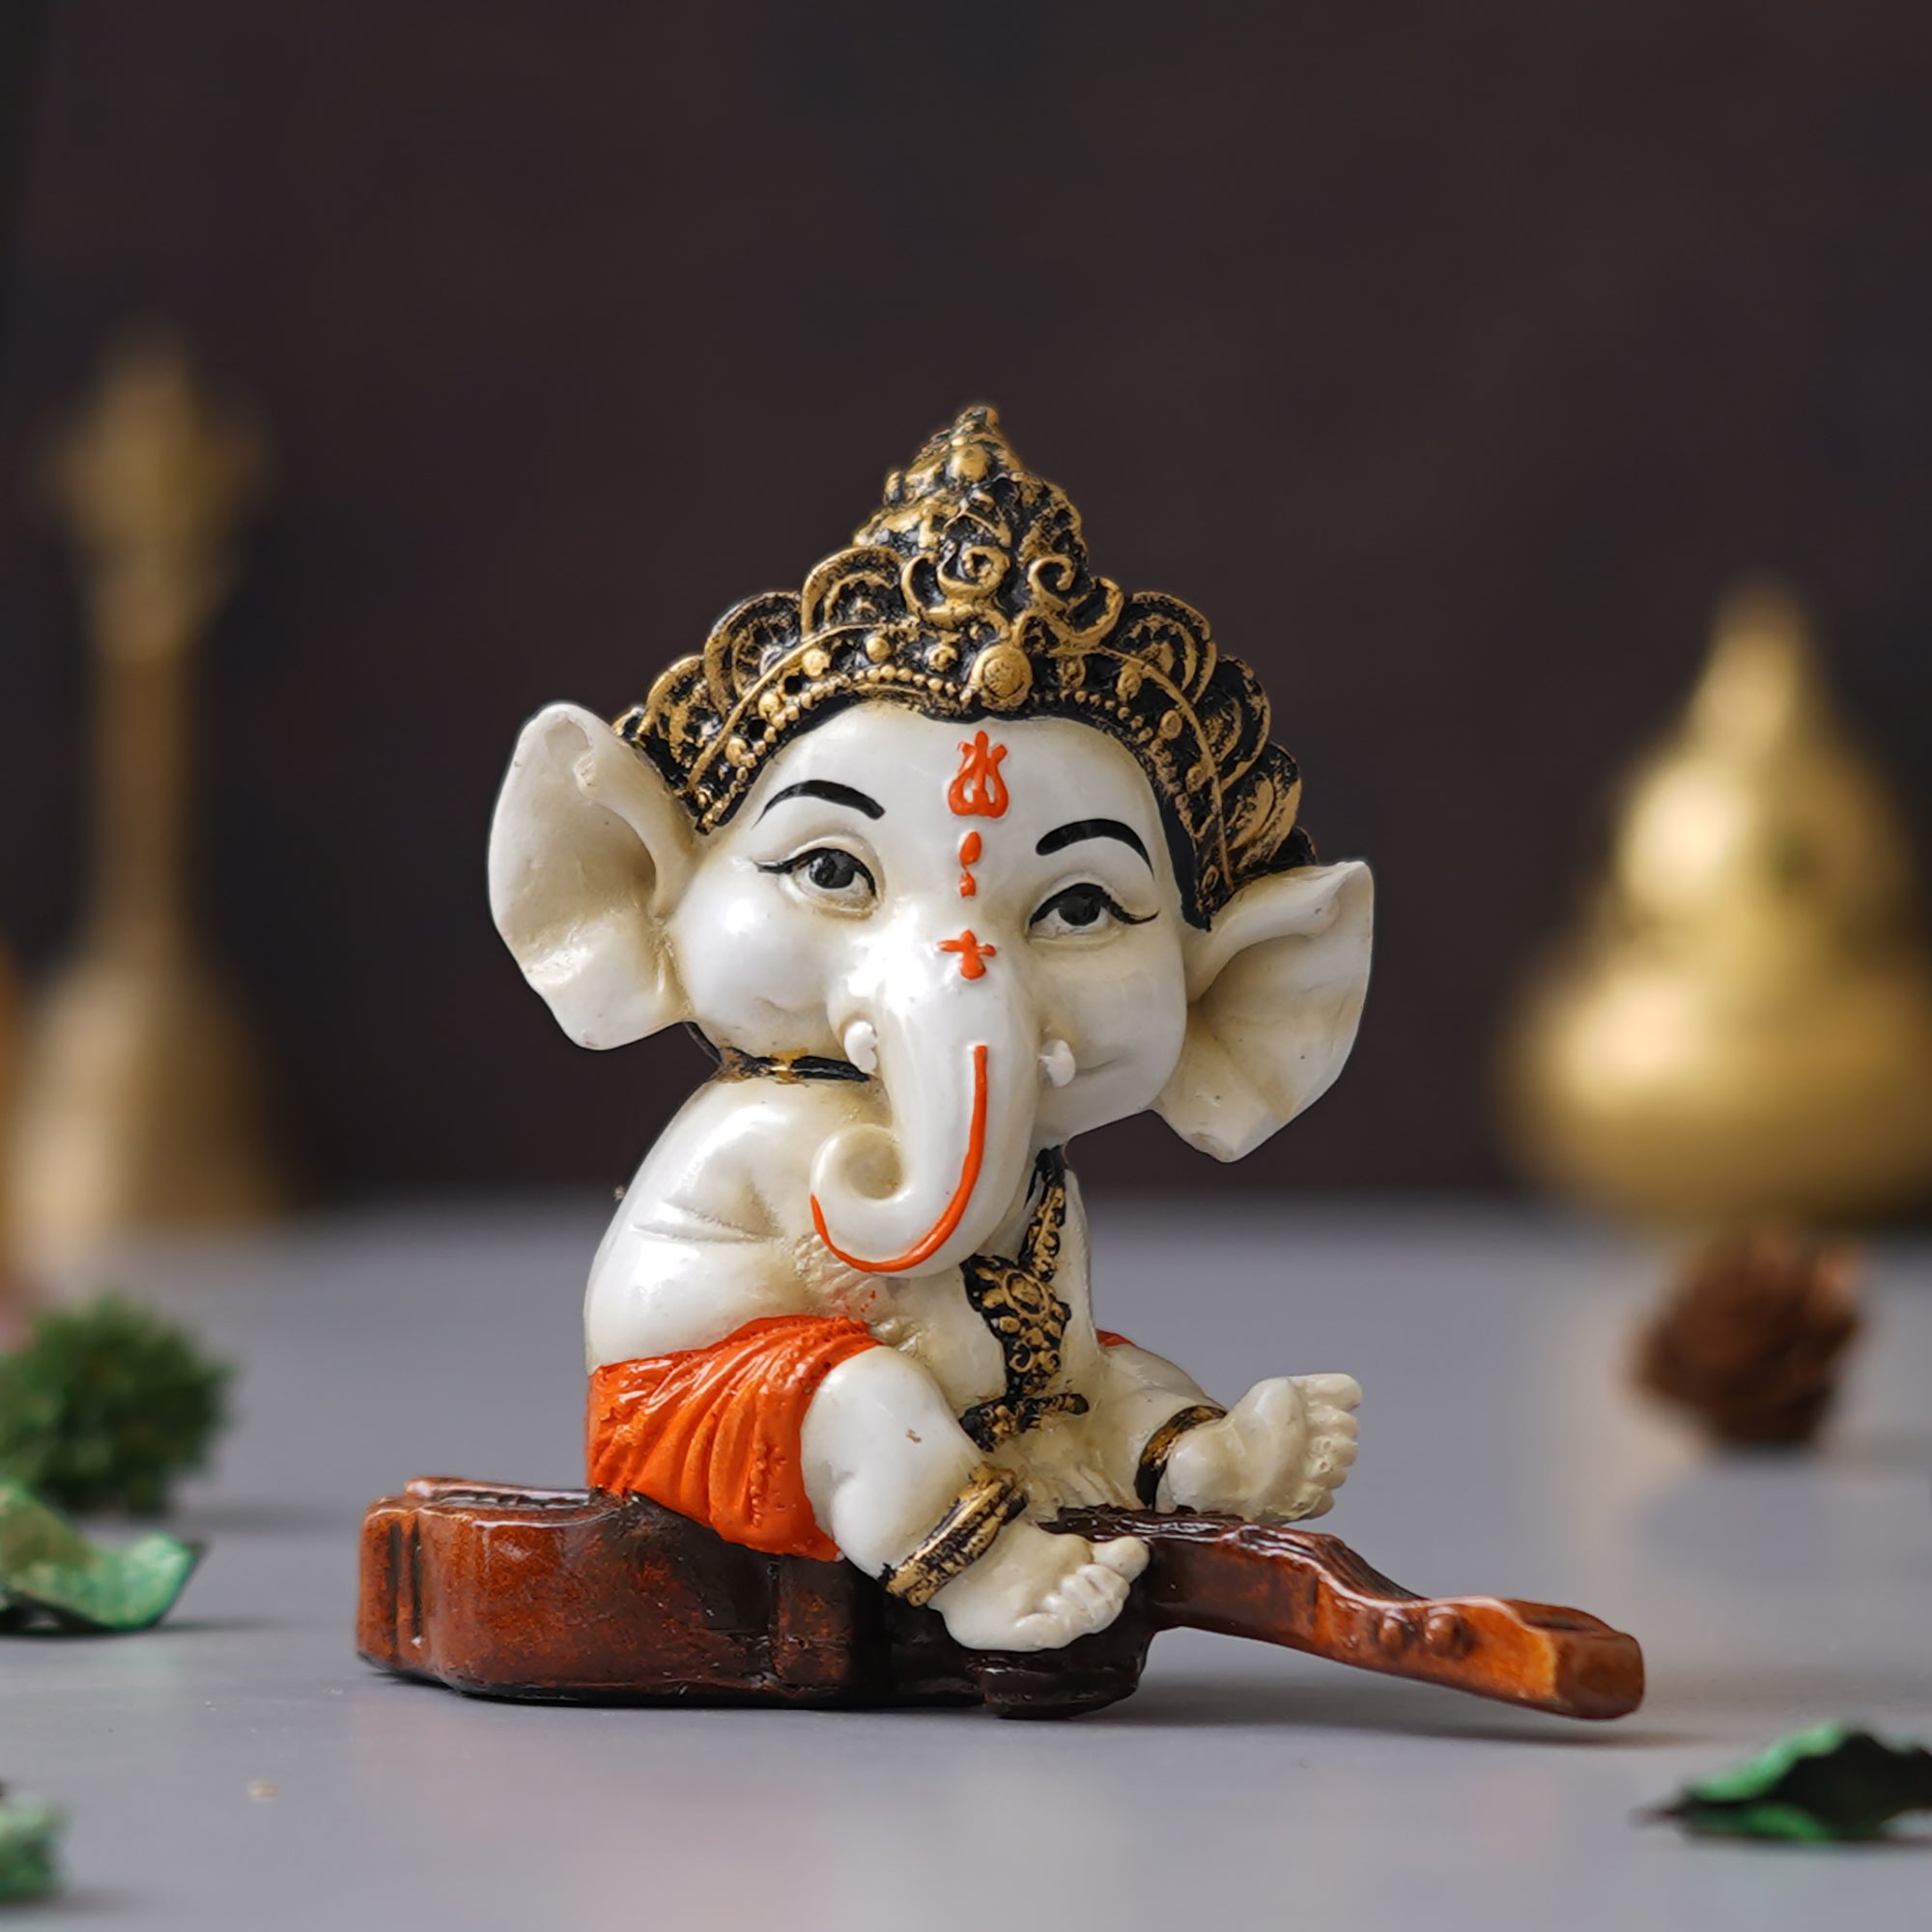 eCraftIndia Orange Polyresin Decorated Lord Ganesha Idol Sitting on Veena Musical Instrument 5